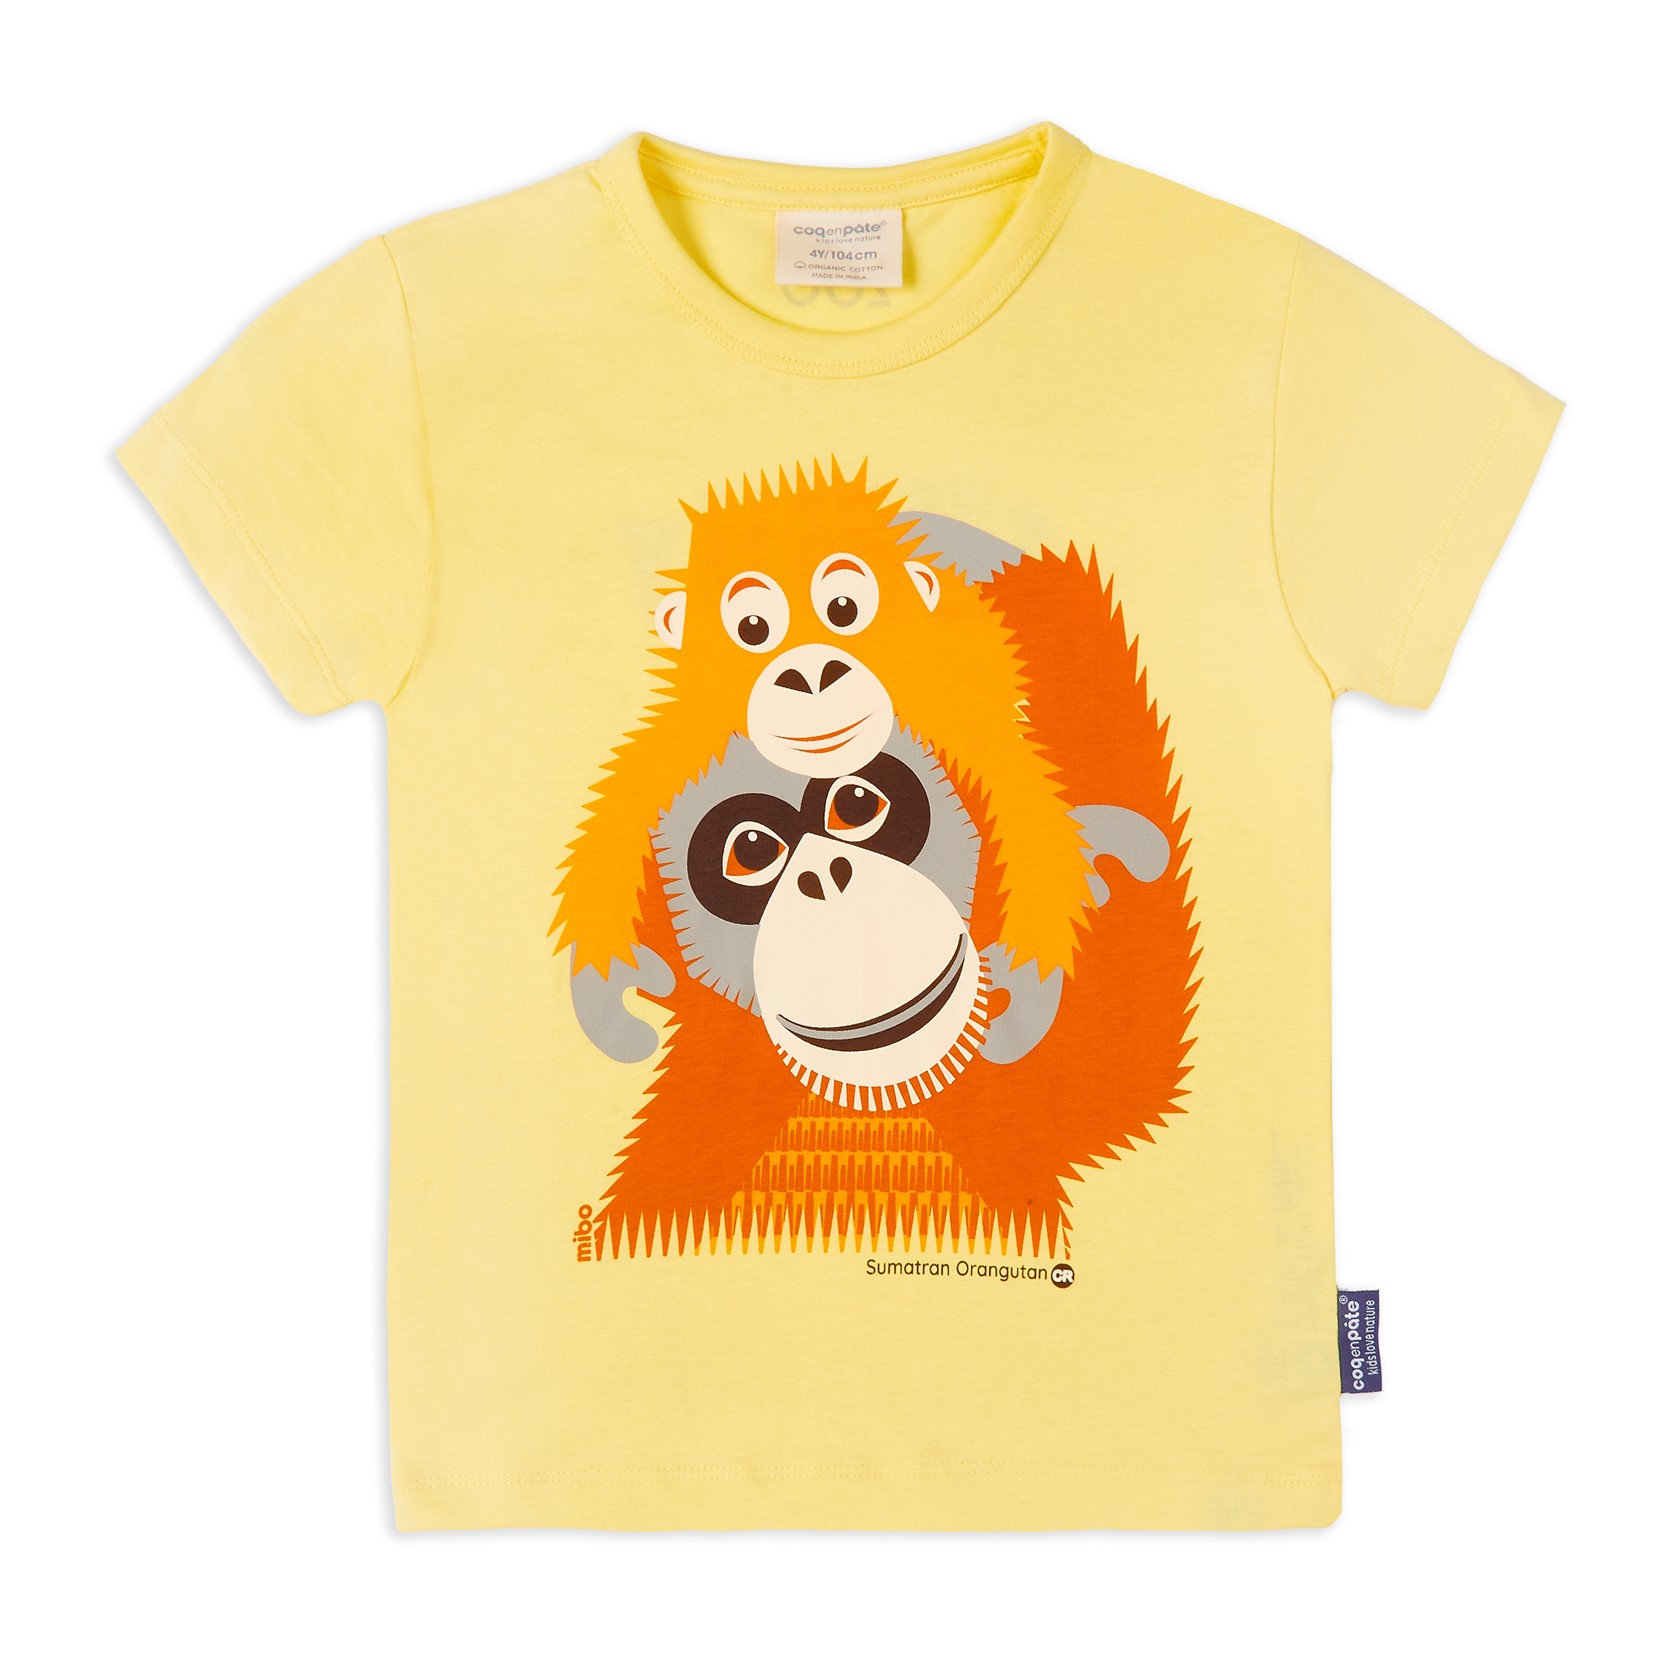 Coq en Pate Orangutan T-Shirt